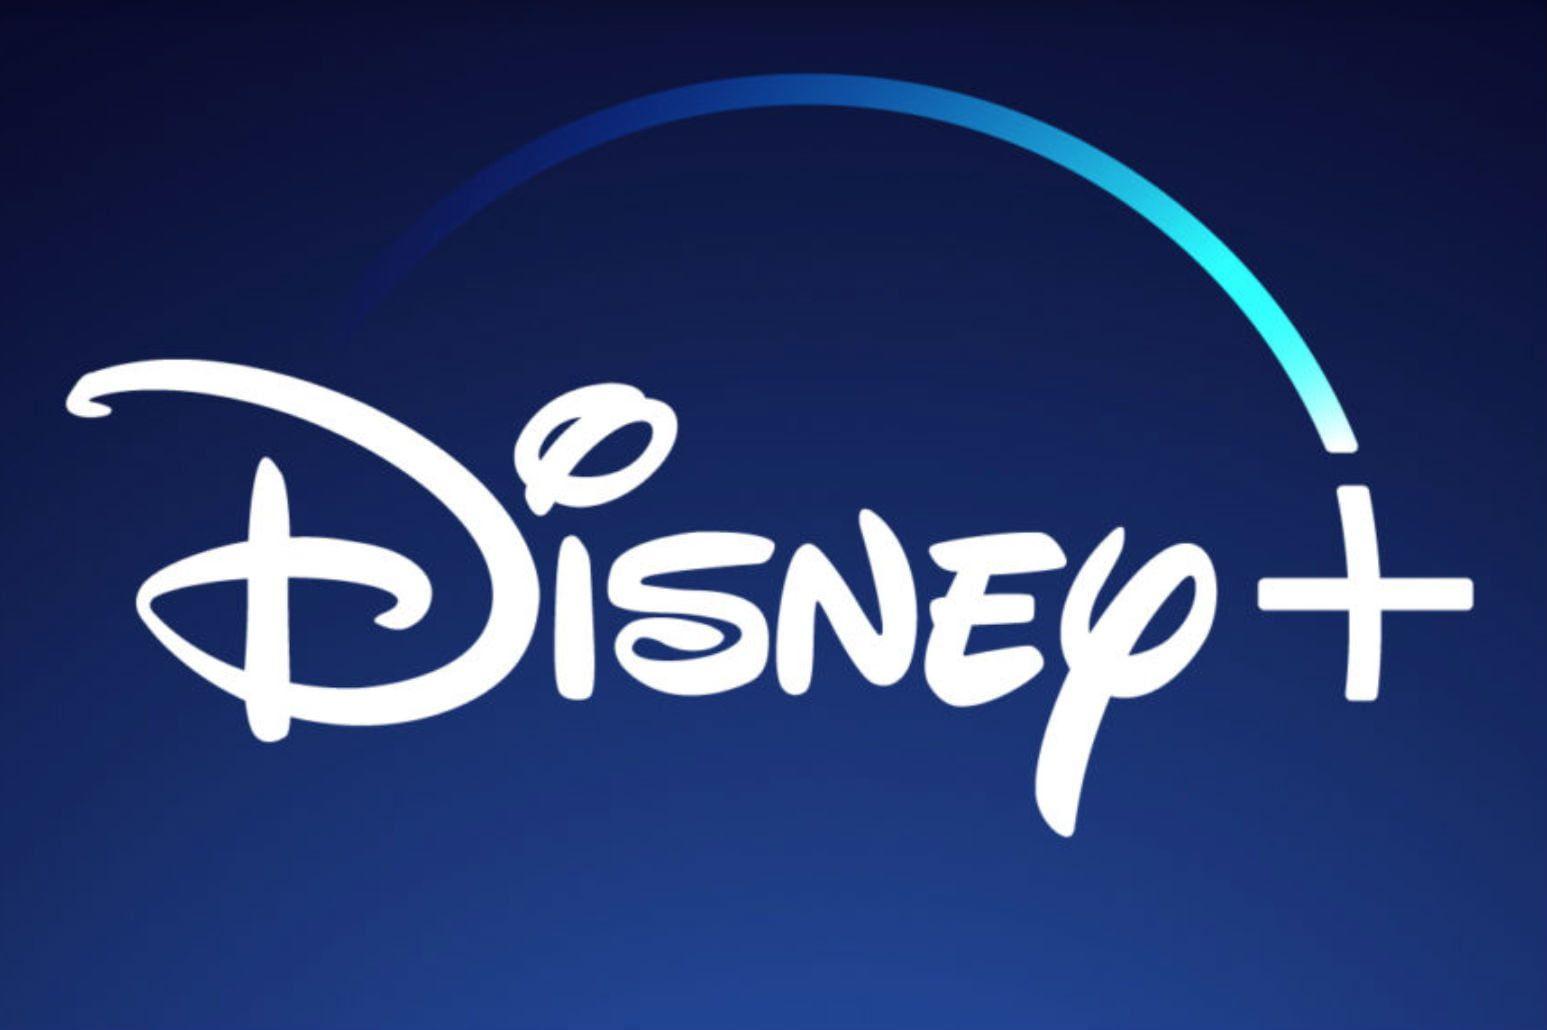 Disney Pixar Logo - Disney Plus: Everything We Know About Disney's Streaming Service ...